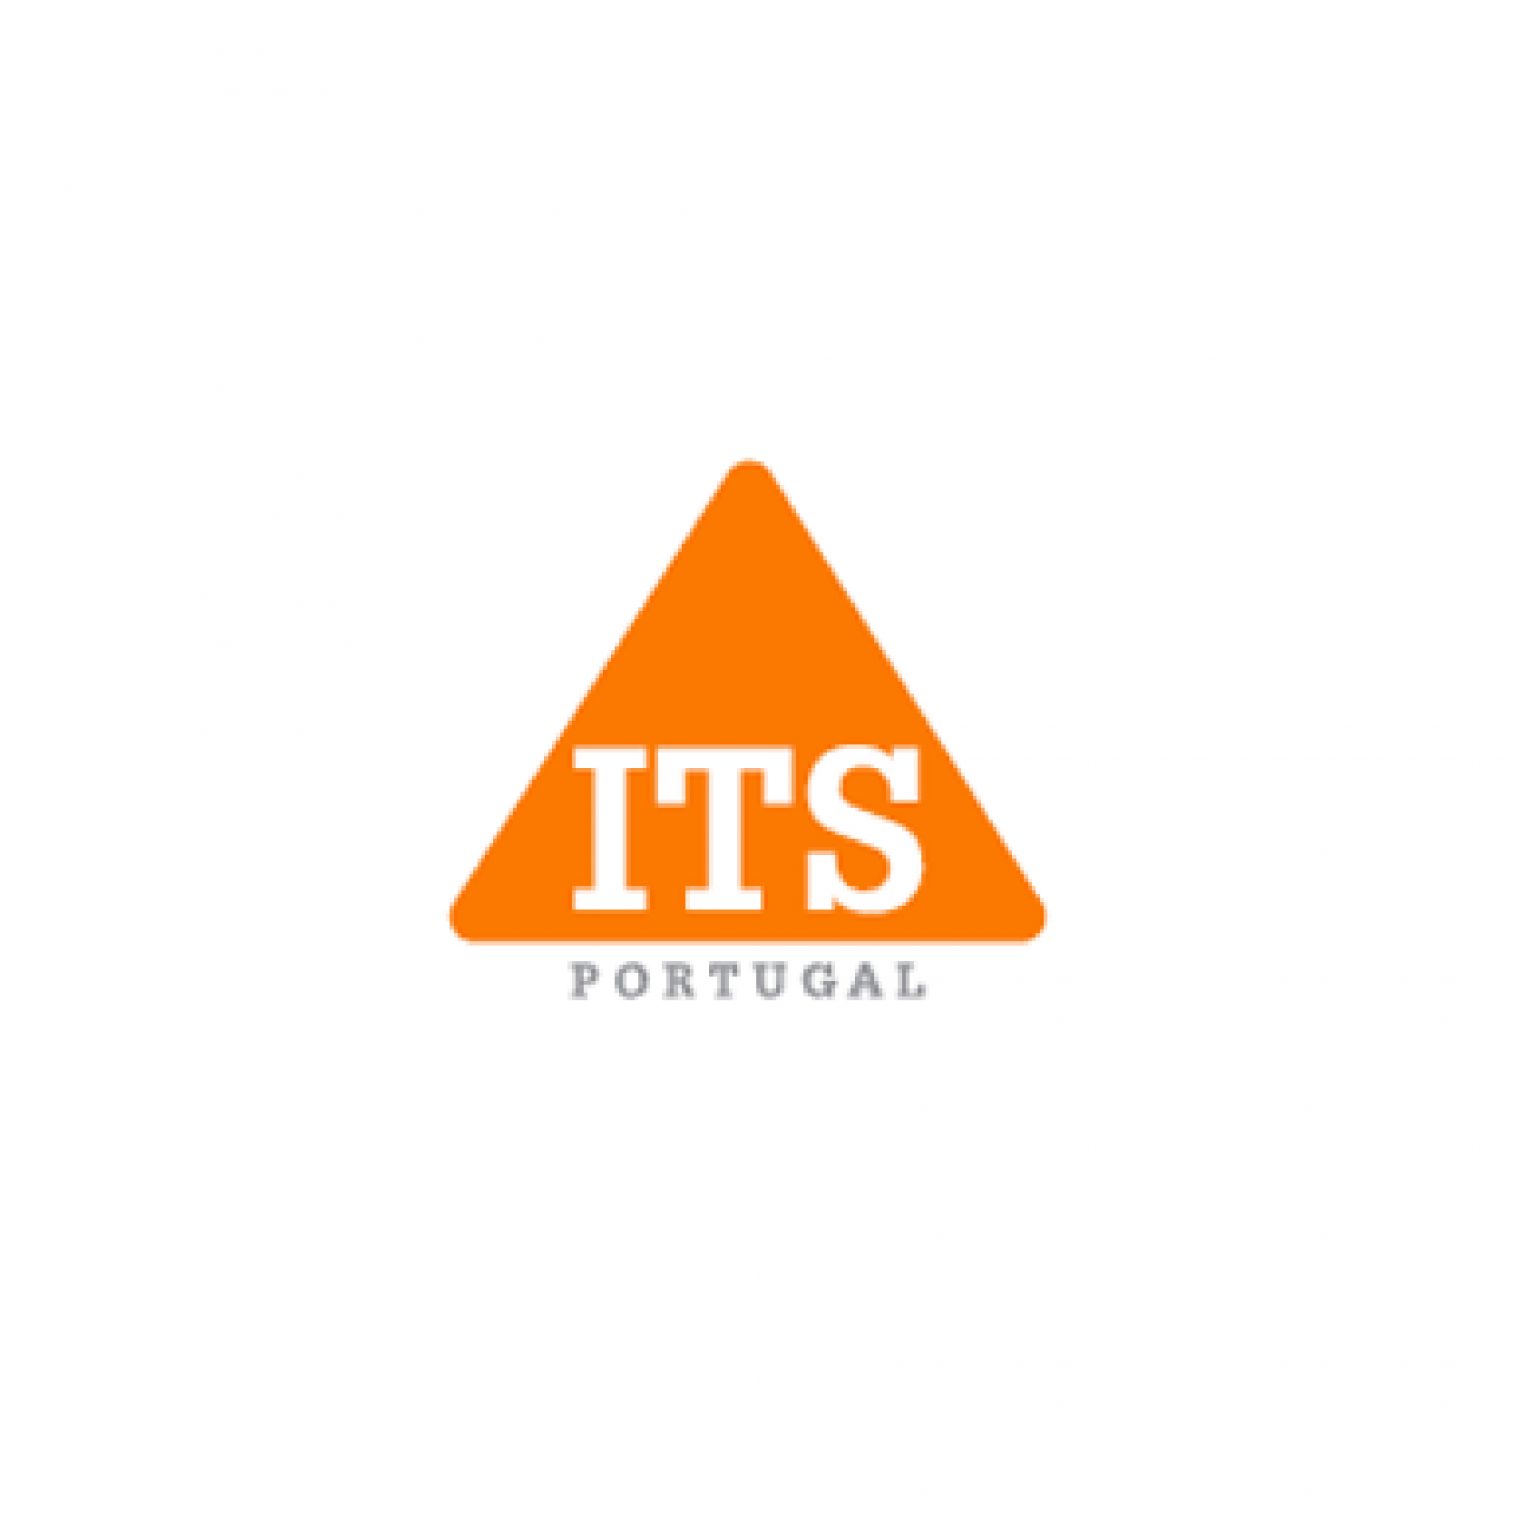 ITS Portugal